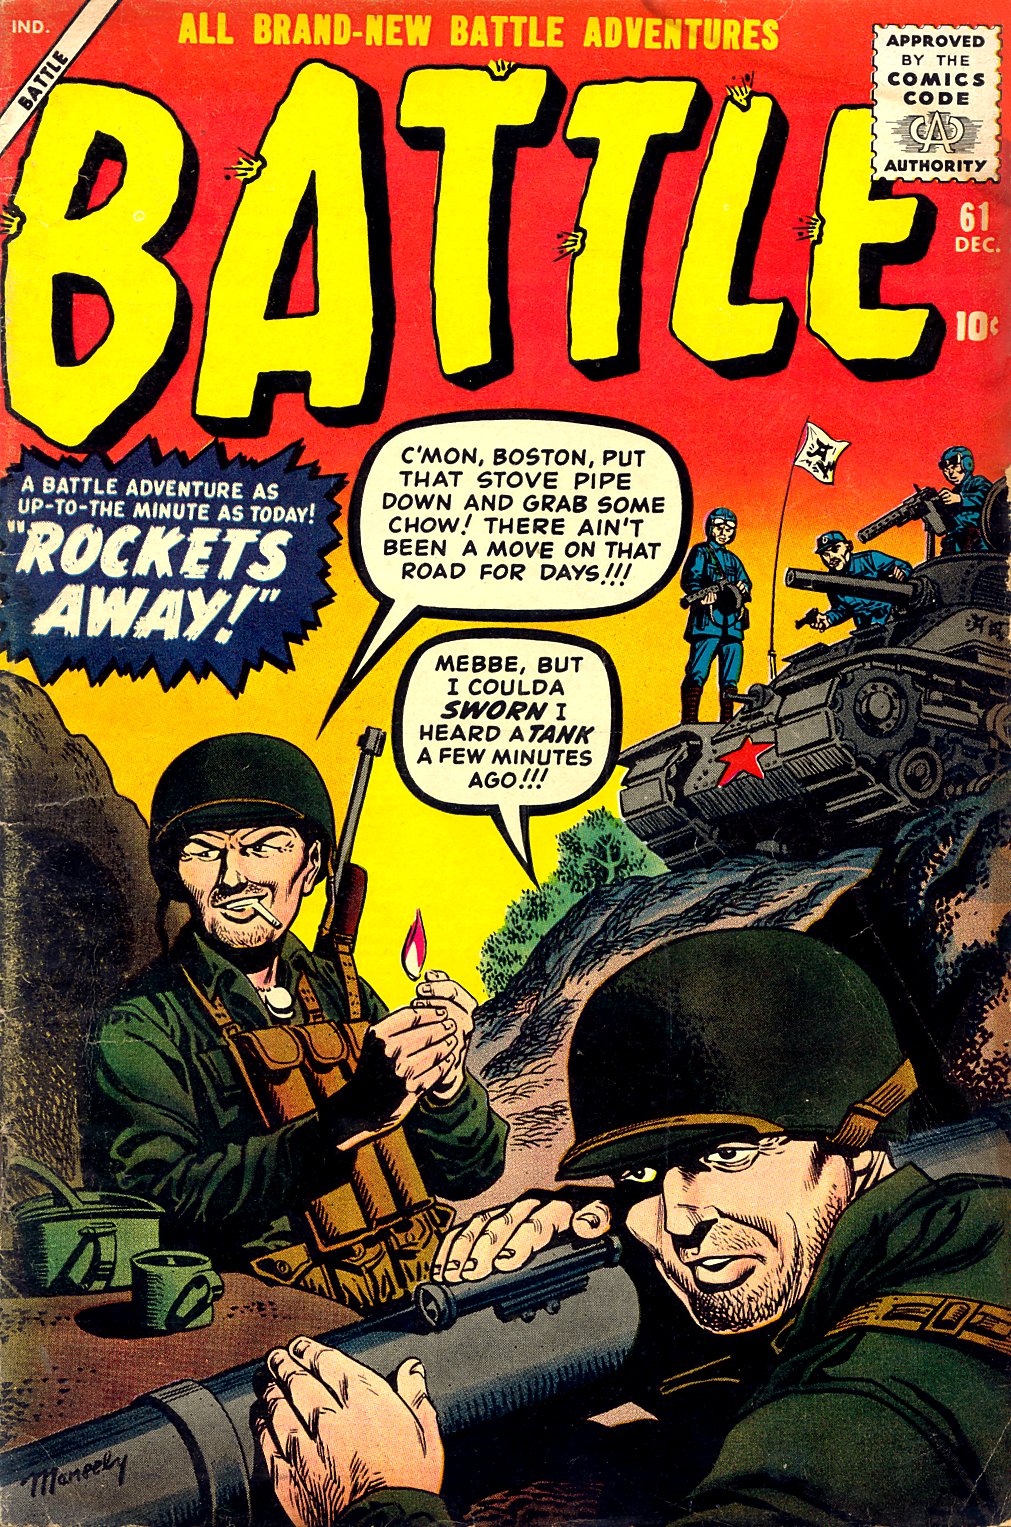 Read online Battle comic -  Issue #61 - 1